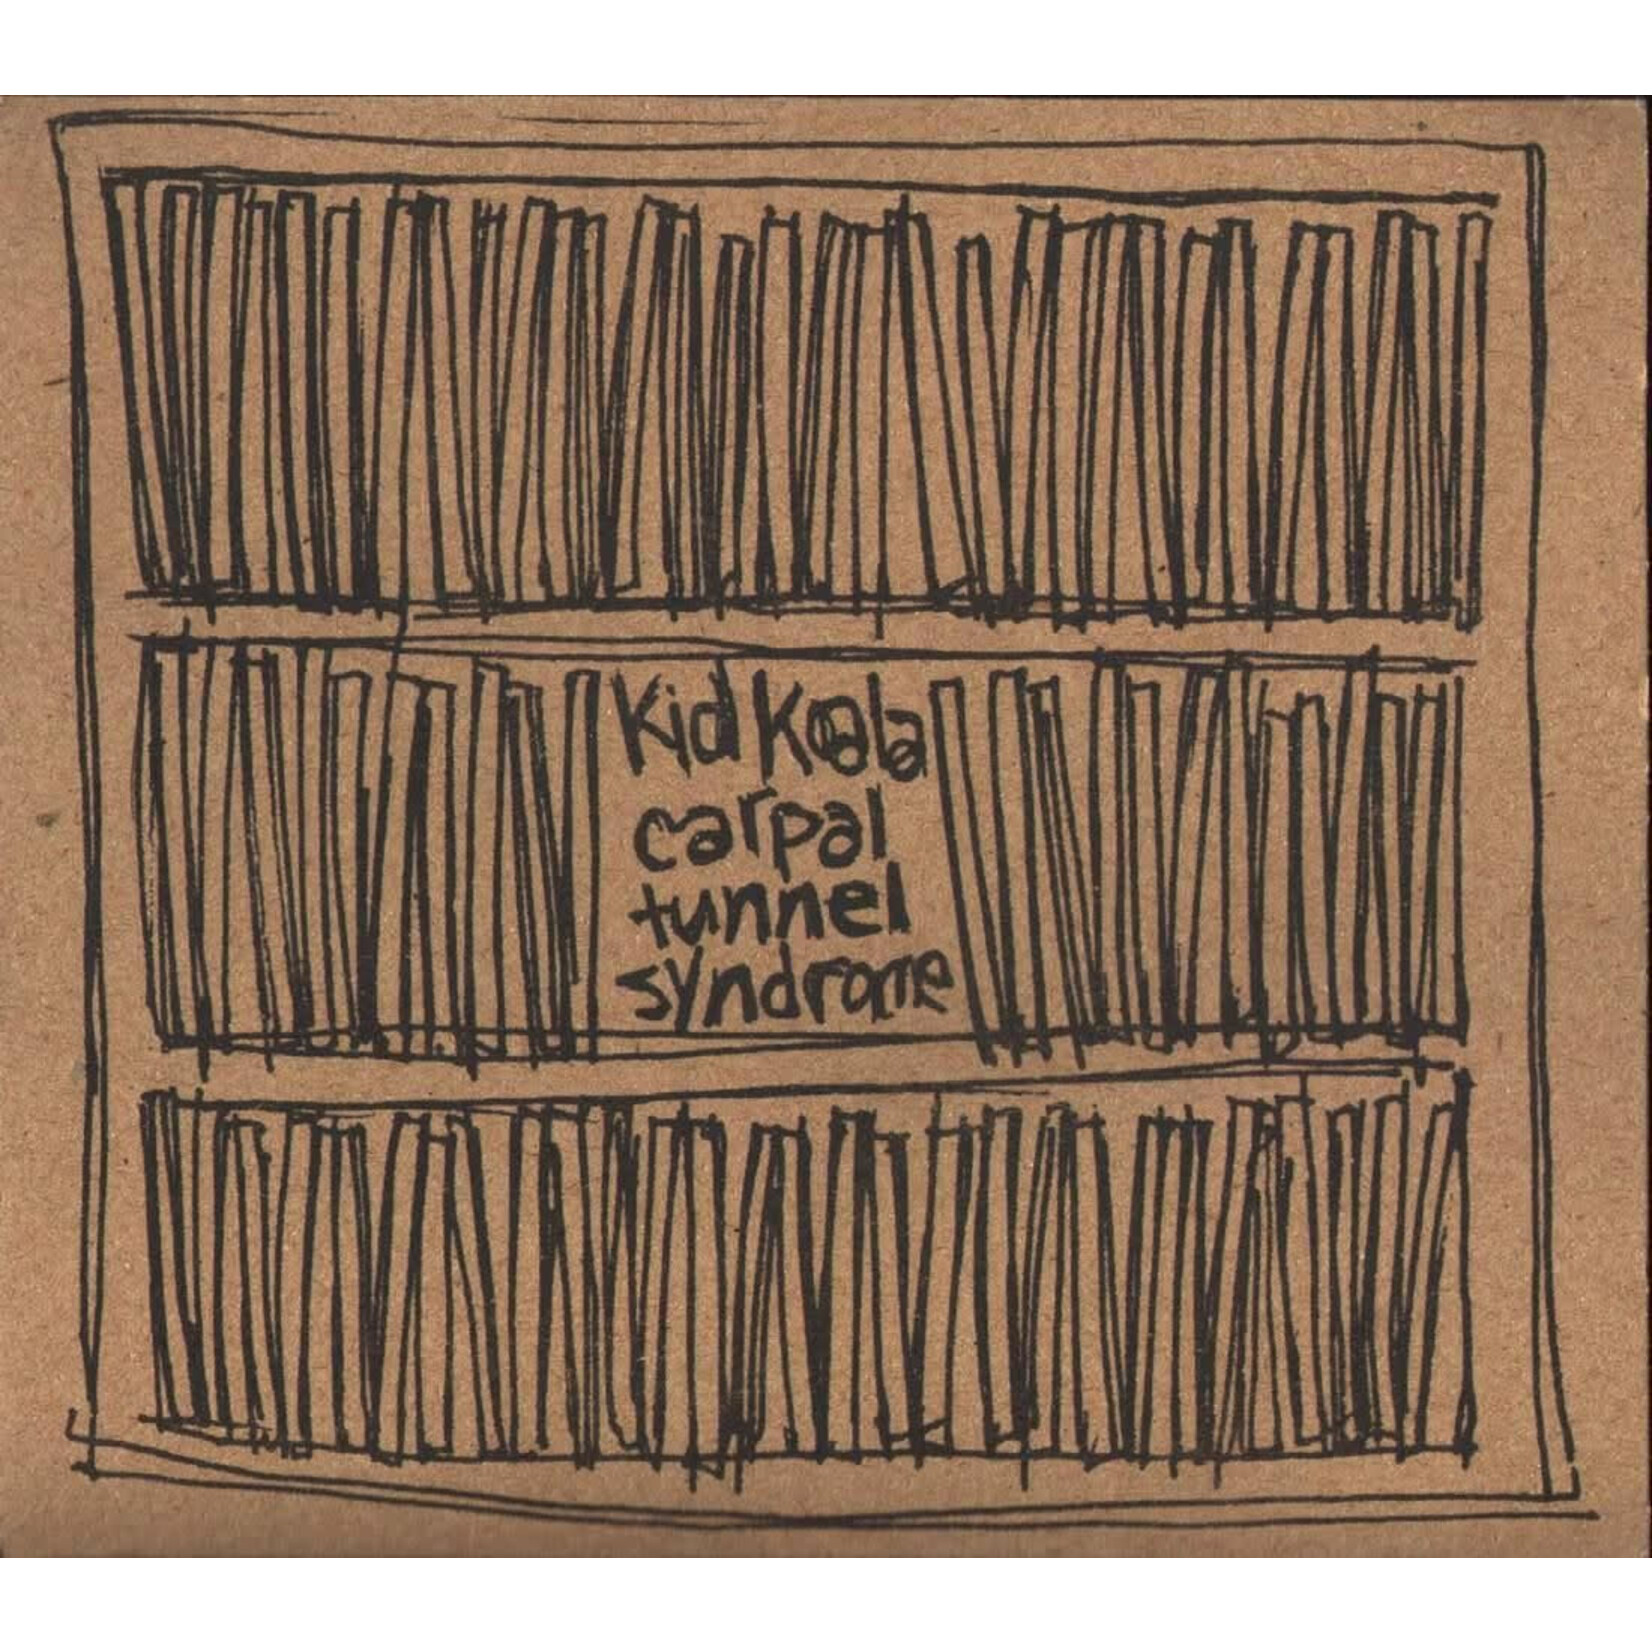 Kid Koala - Carpal Tunnel Syndrome [CD]